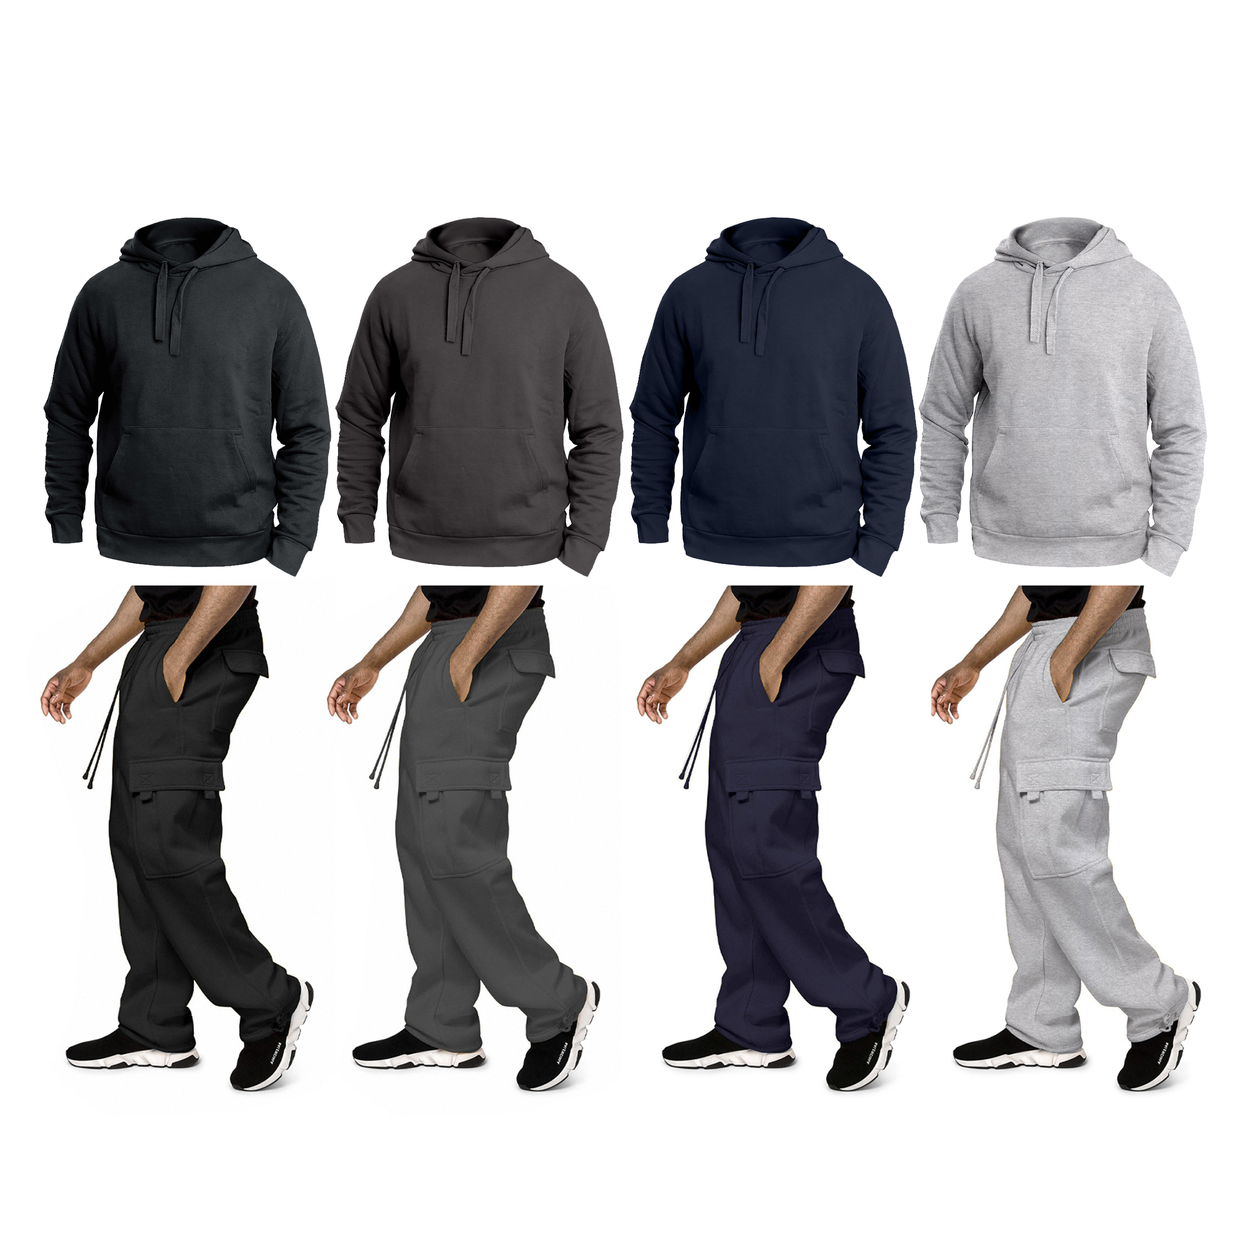 Men's Big & Tall Winter Warm Cozy Athletic Fleece Lined Multi-Pocket Cargo Sweatsuit - Grey, Medium